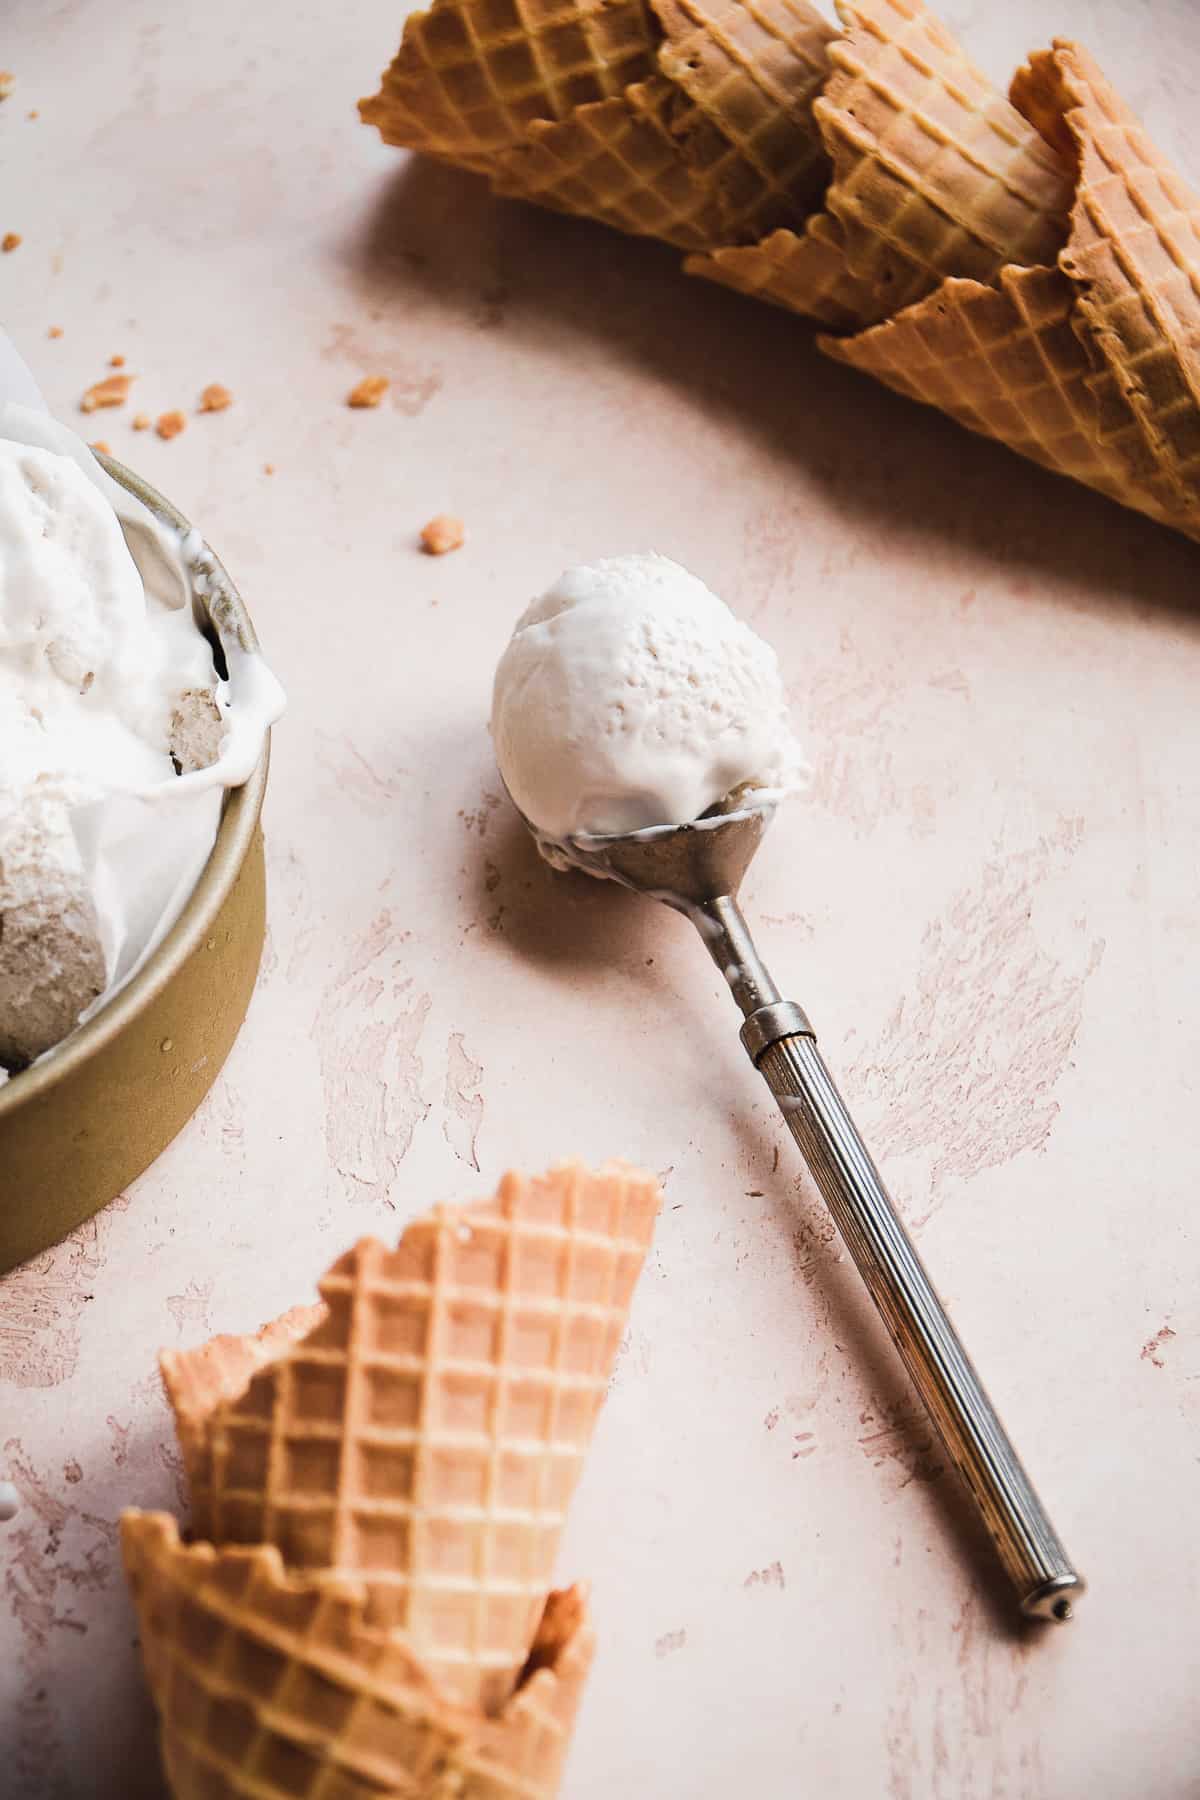 Ice cream scoop with dairy free vanilla ice cream and cones in the background.